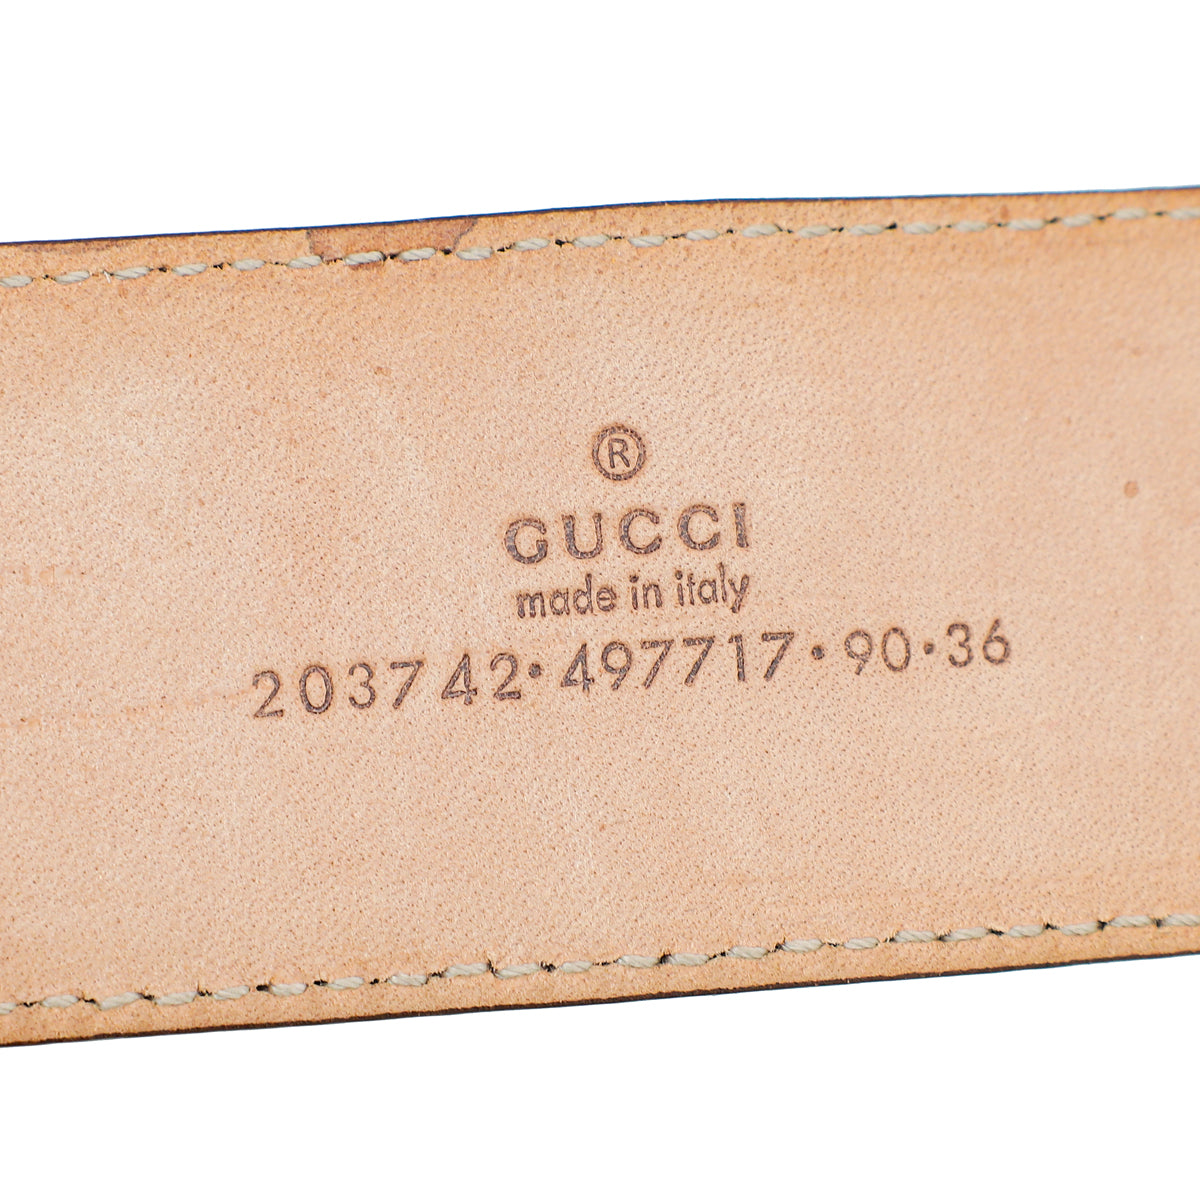 Gucci Bicolor GG Supreme G Buckle Belt 36